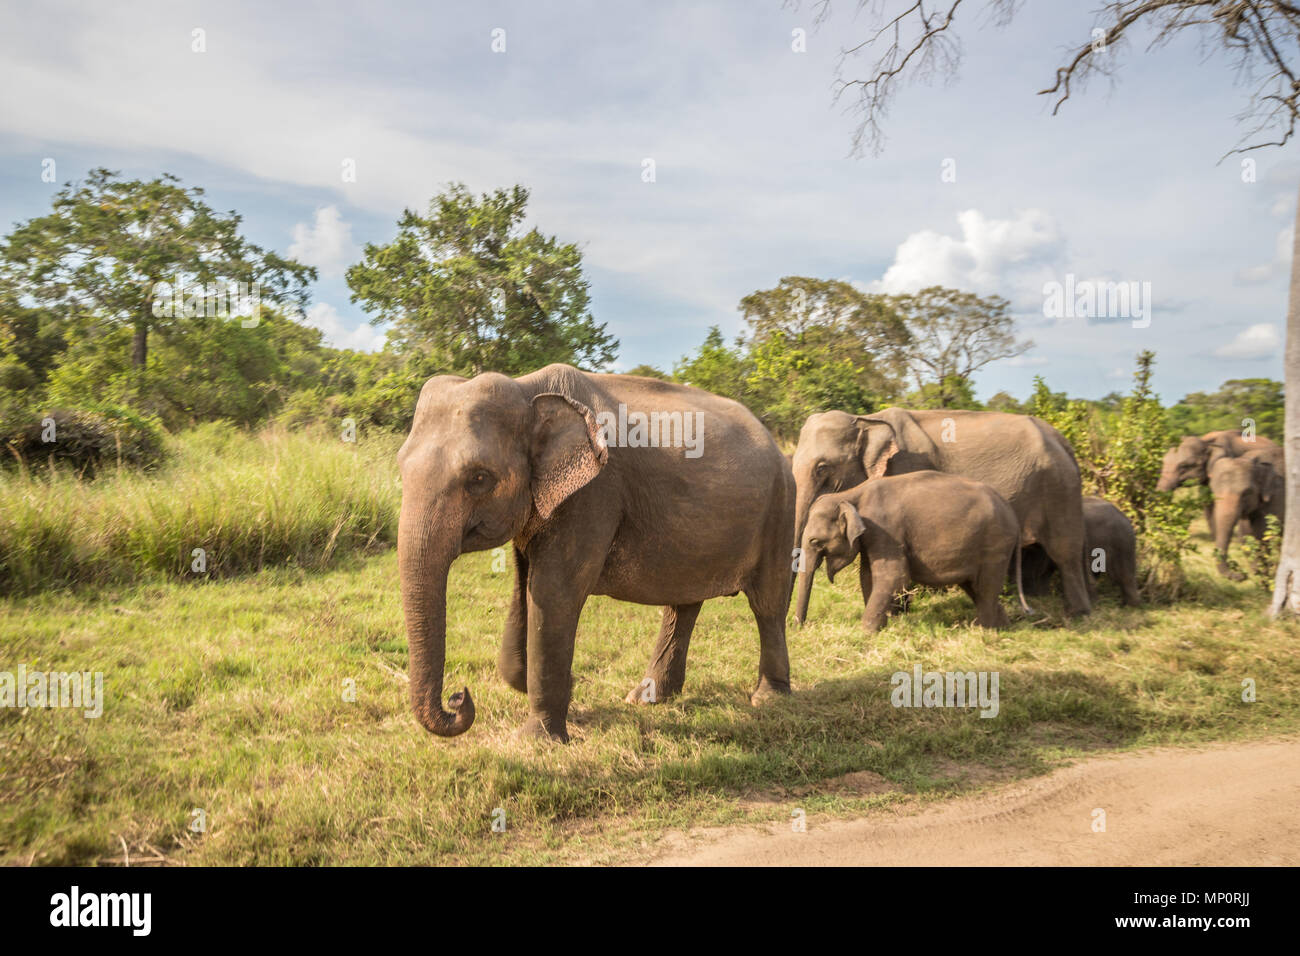 Sri Lanka Elephant herd Stock Photo